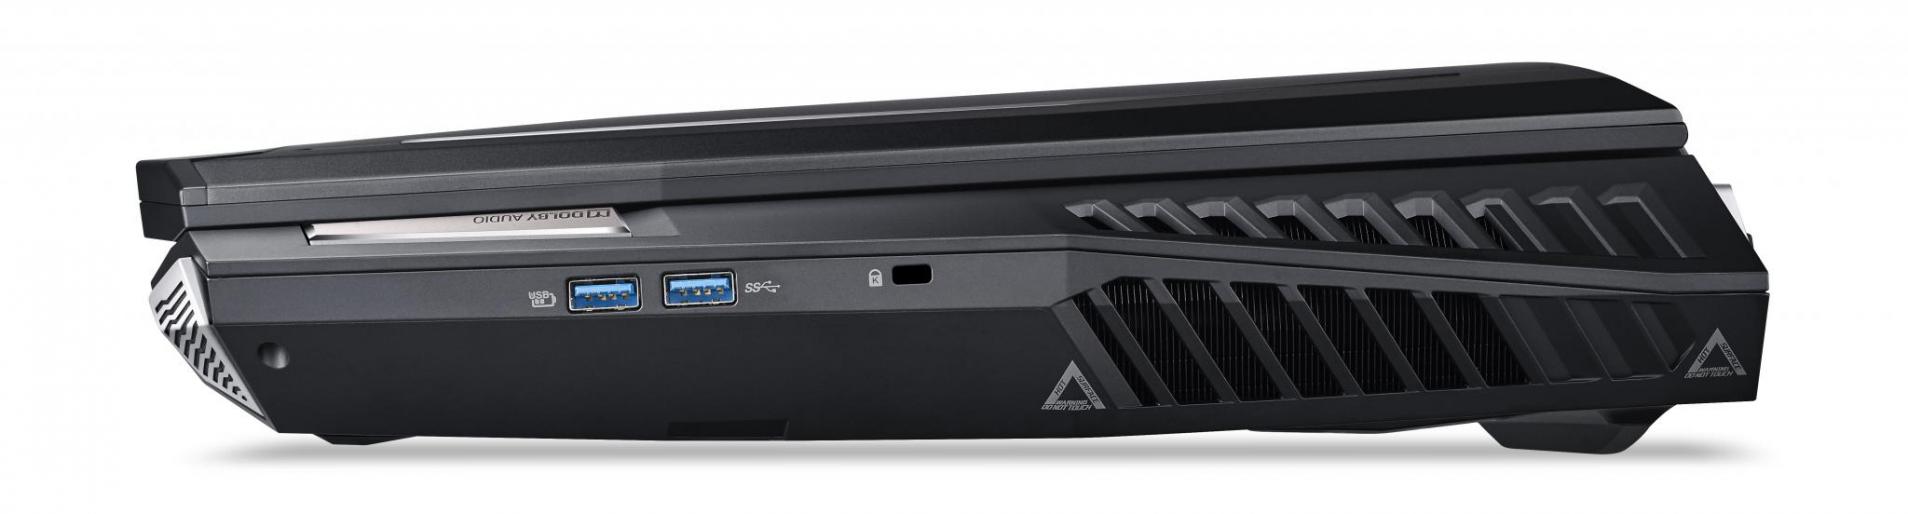 Acer Predator Gaming Notebook